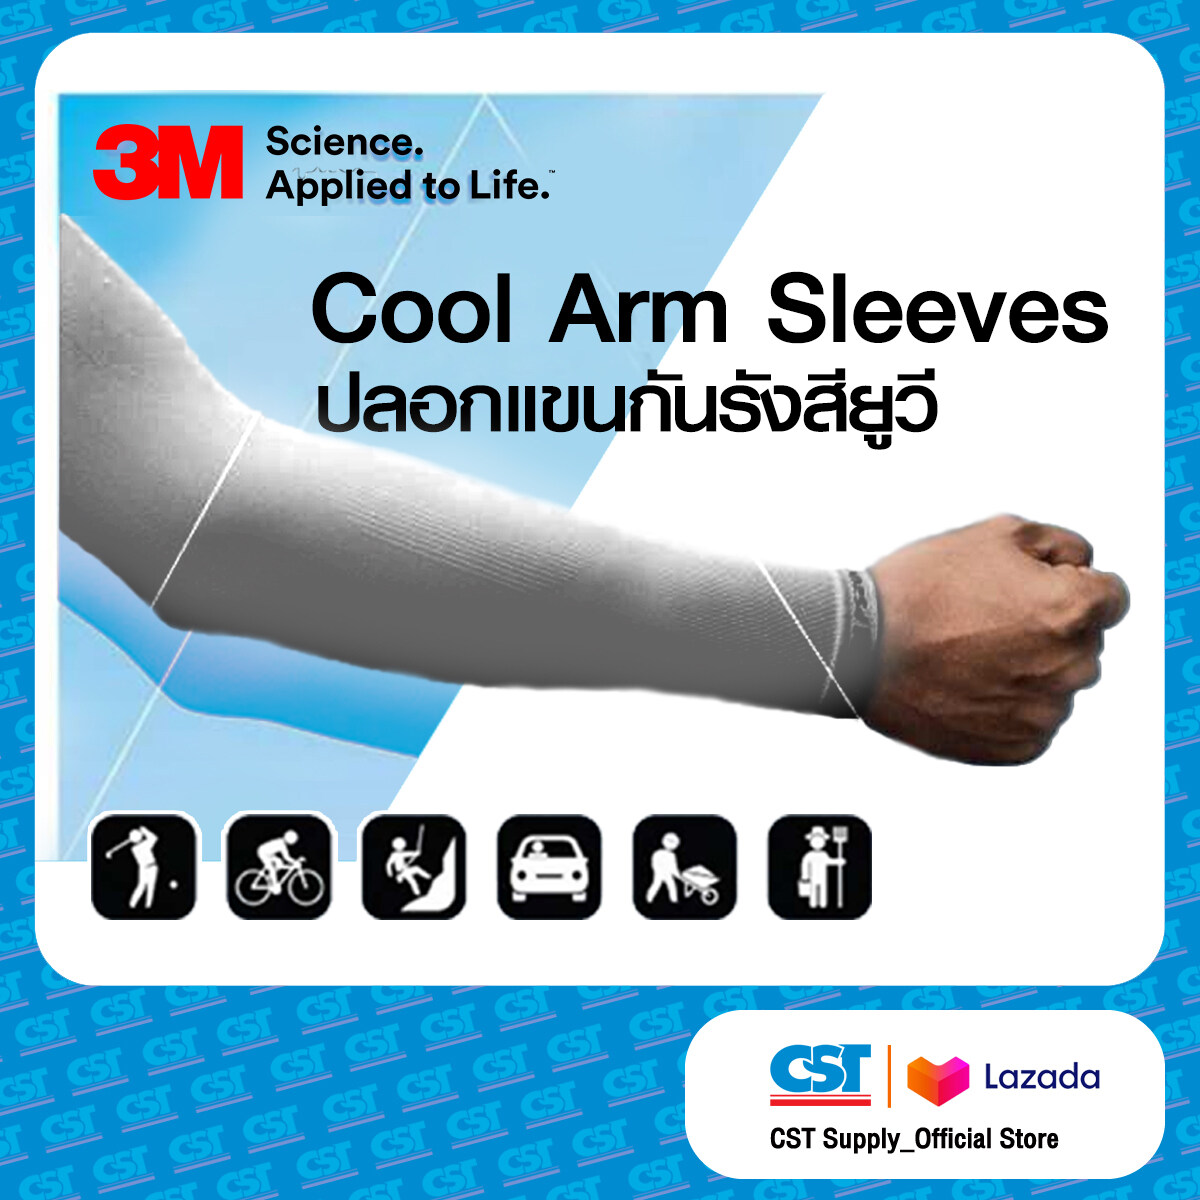 3M Cool Arm Sleeves ปลอกแขนป้องกัน UV (สีเทา) ราคา/แพ็ค 1 แพ็ค มี 1คู่